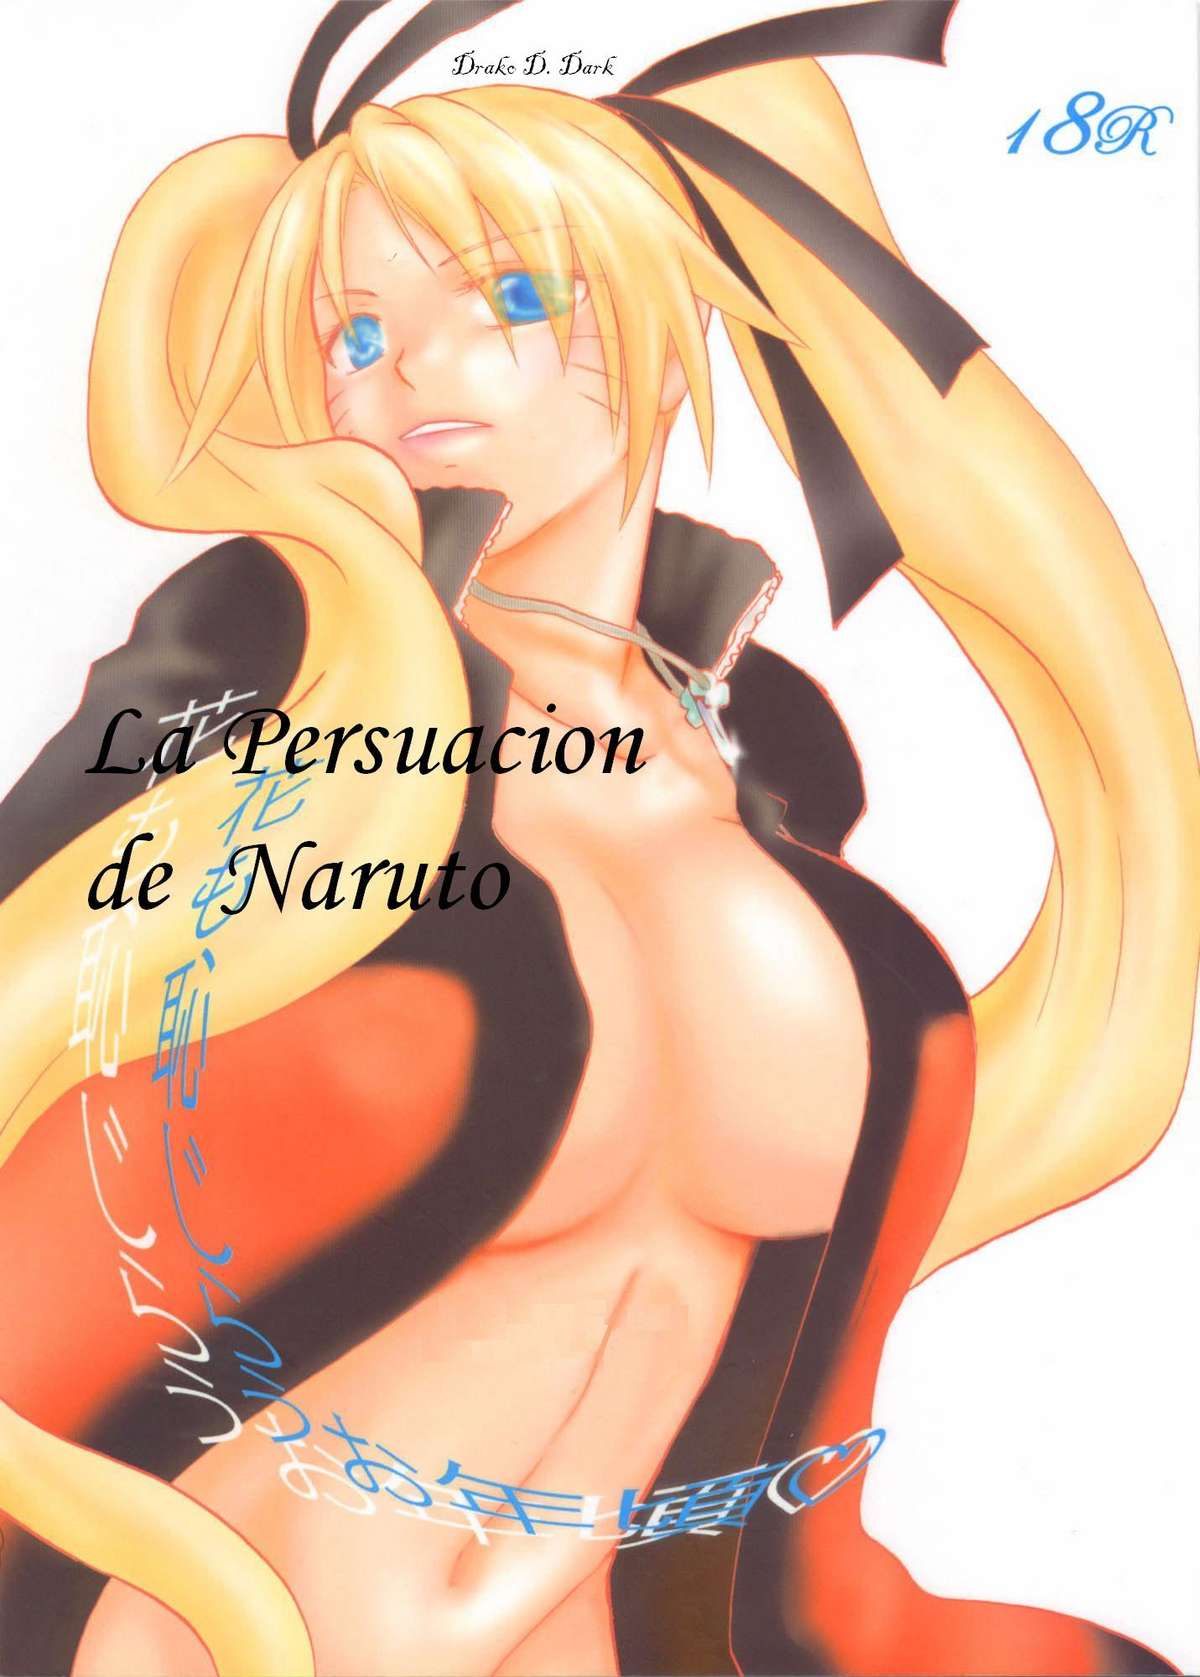 [Drako D. Dark] Naruto Shippuden - La Persuacion de Nartuto [Spanish] 